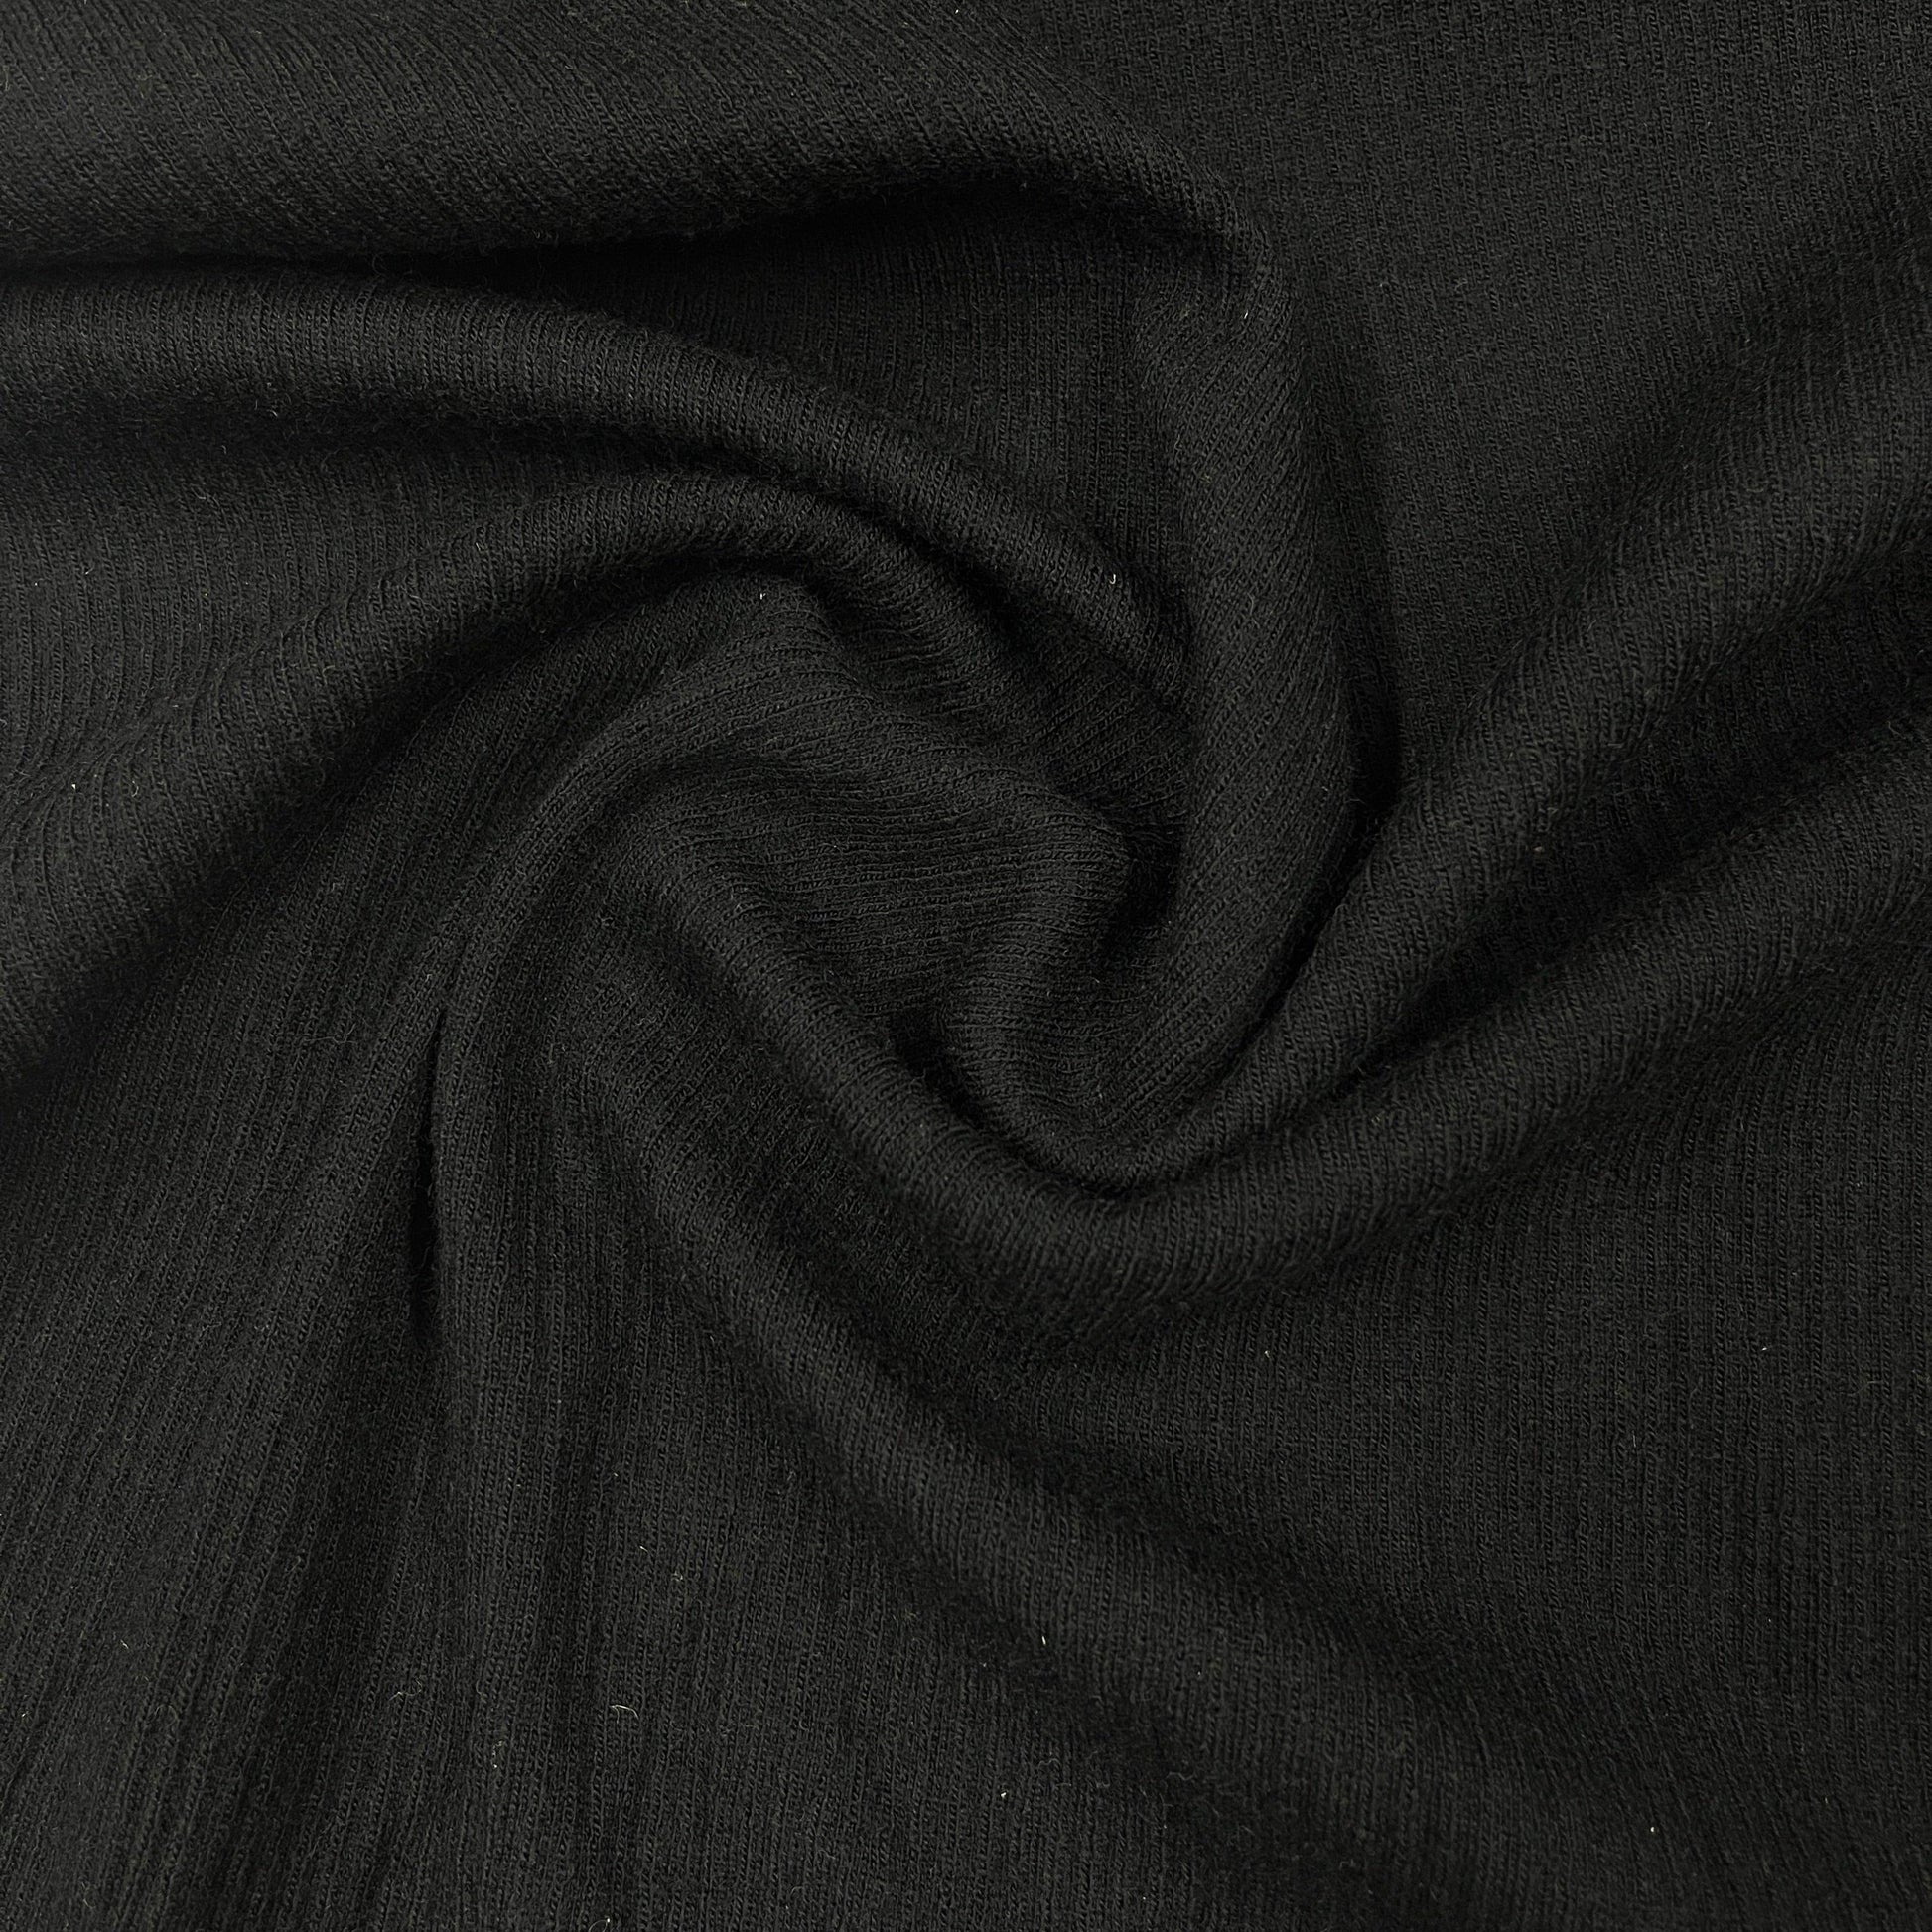 Black Merino Wool Rib Knit Fabric - 1x1 - Nature's Fabrics